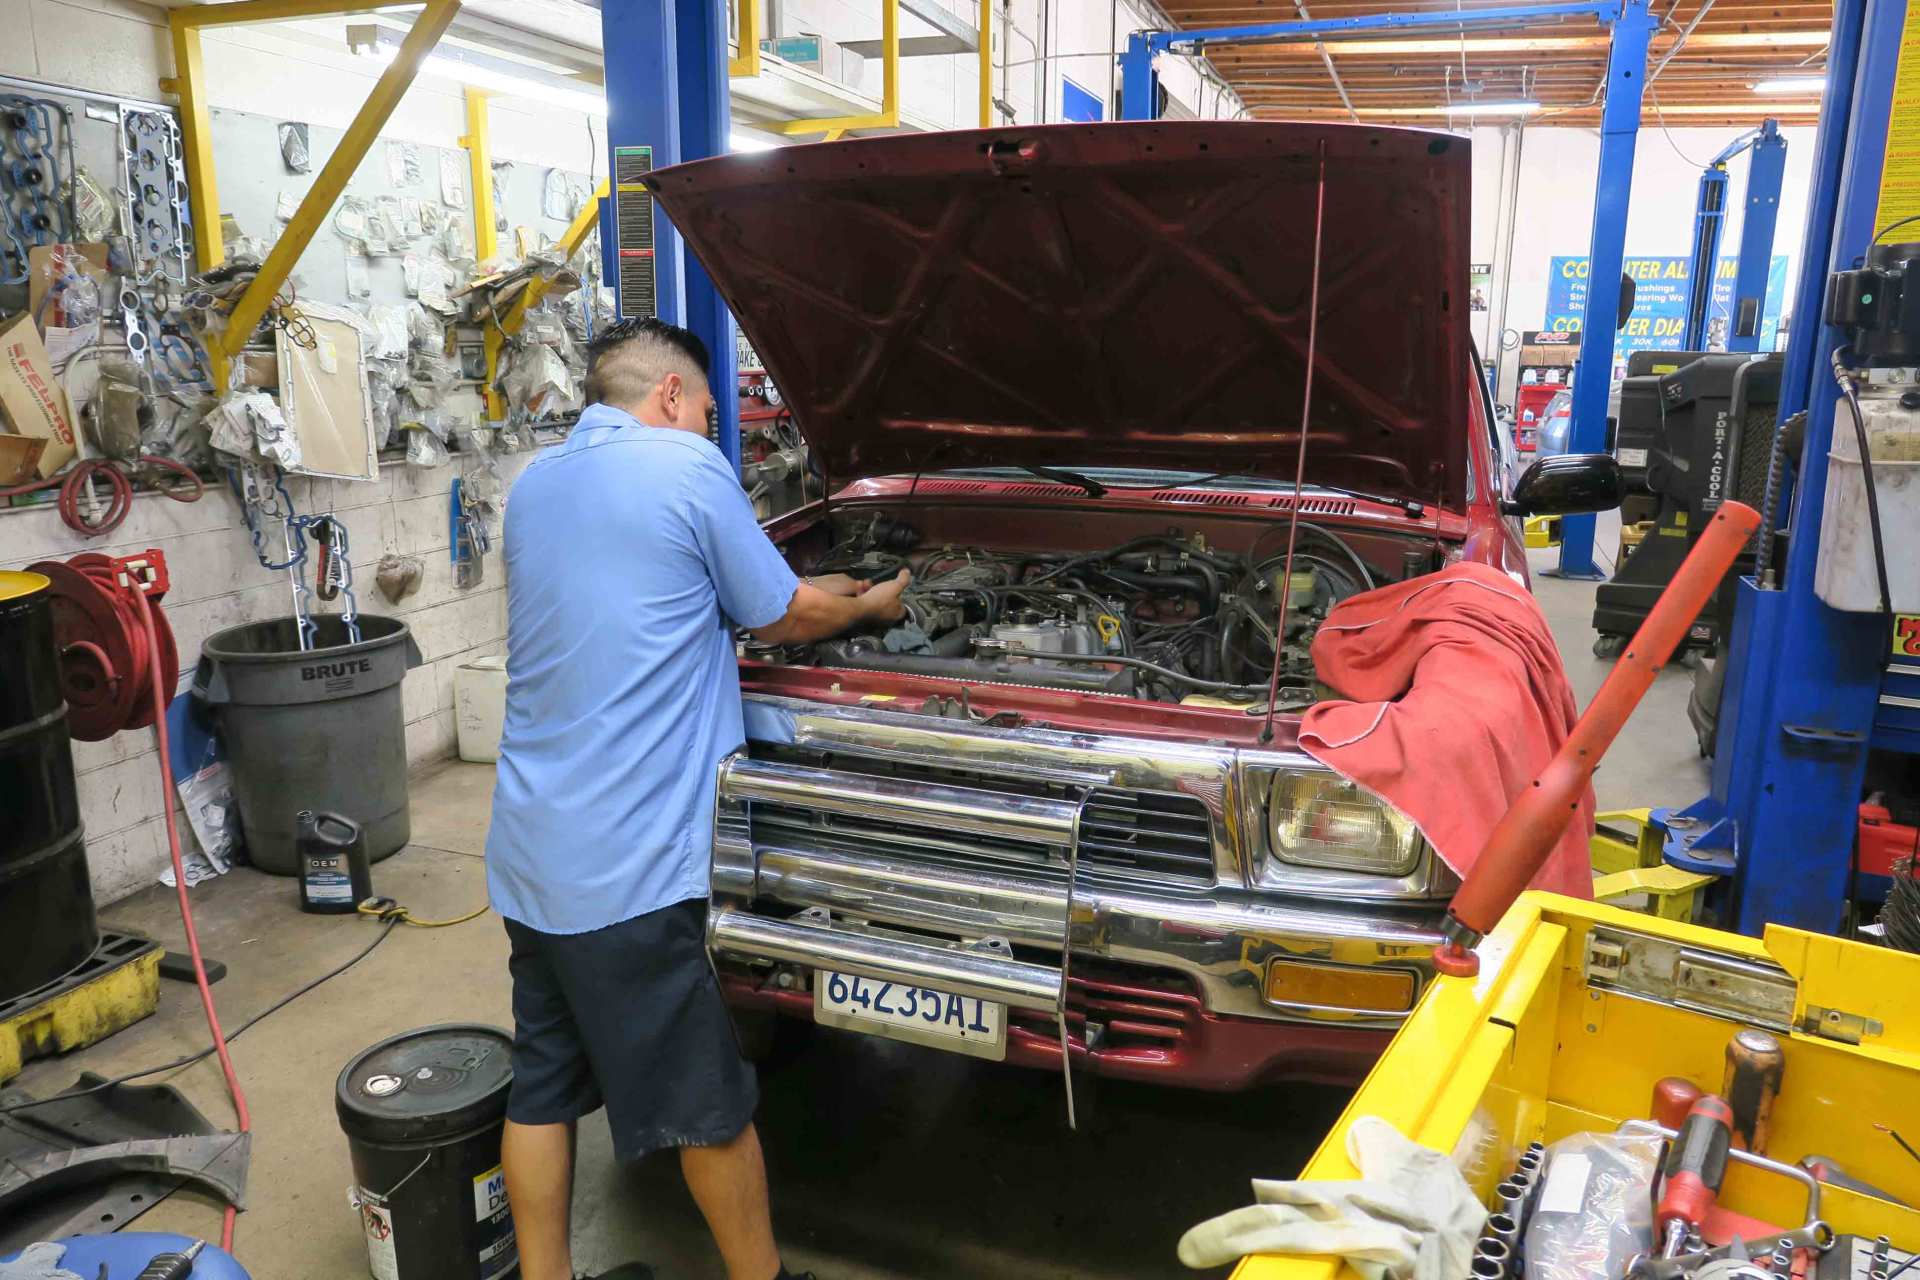 Engine Air Filters — Man Fixing Car Engine in Ontario, California